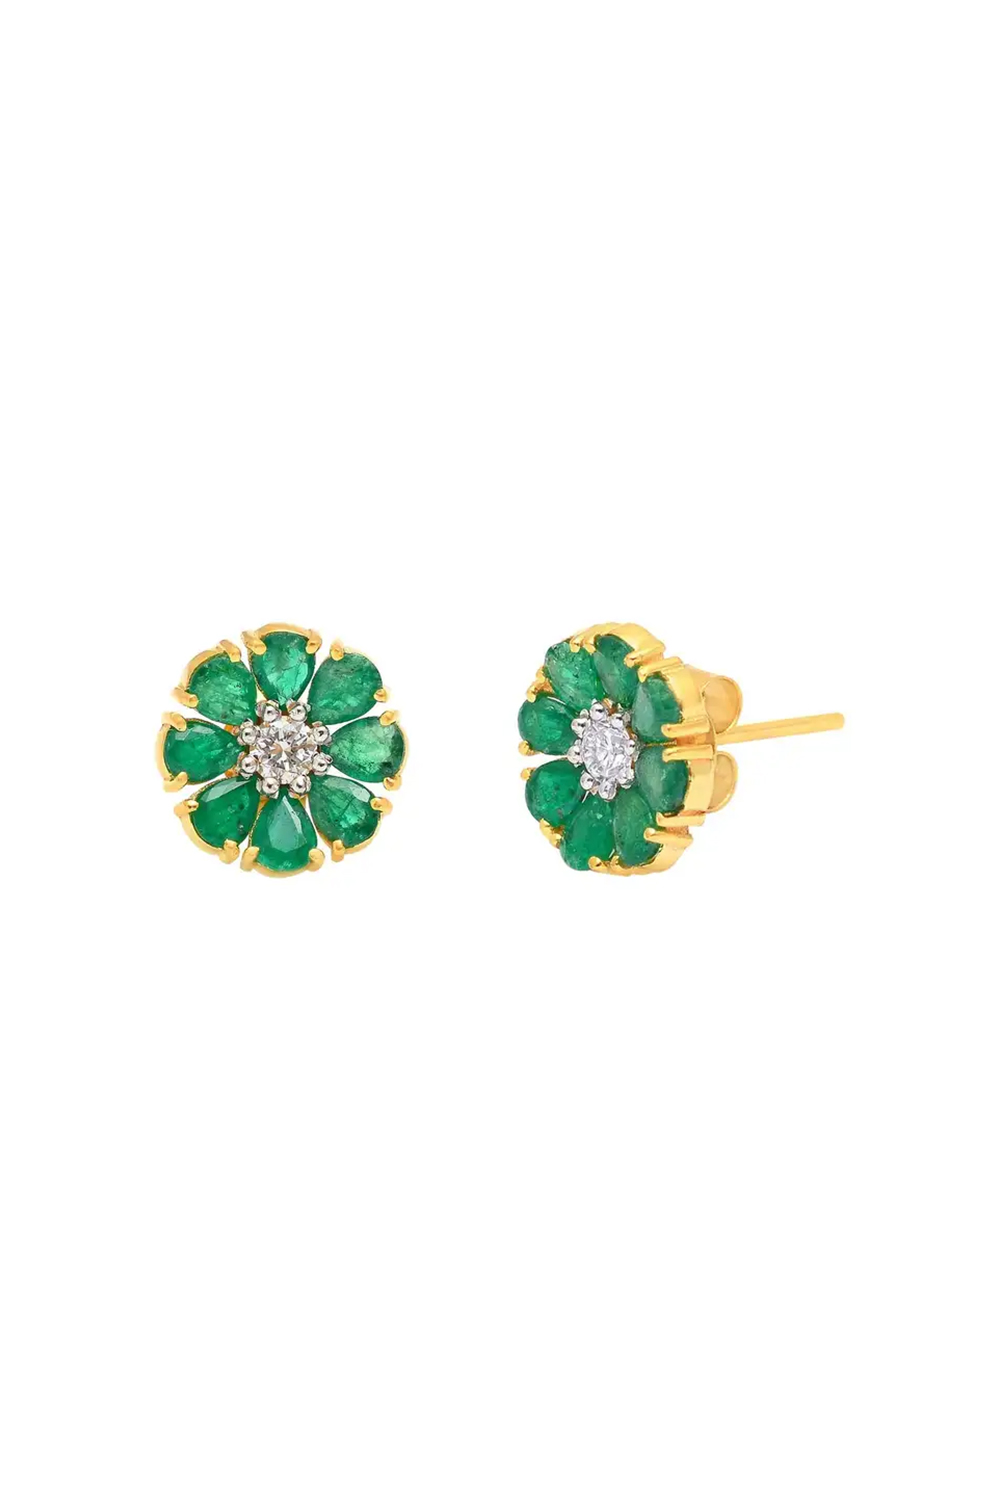 Emerald Stud Earrings with Diamond in 18k Gold